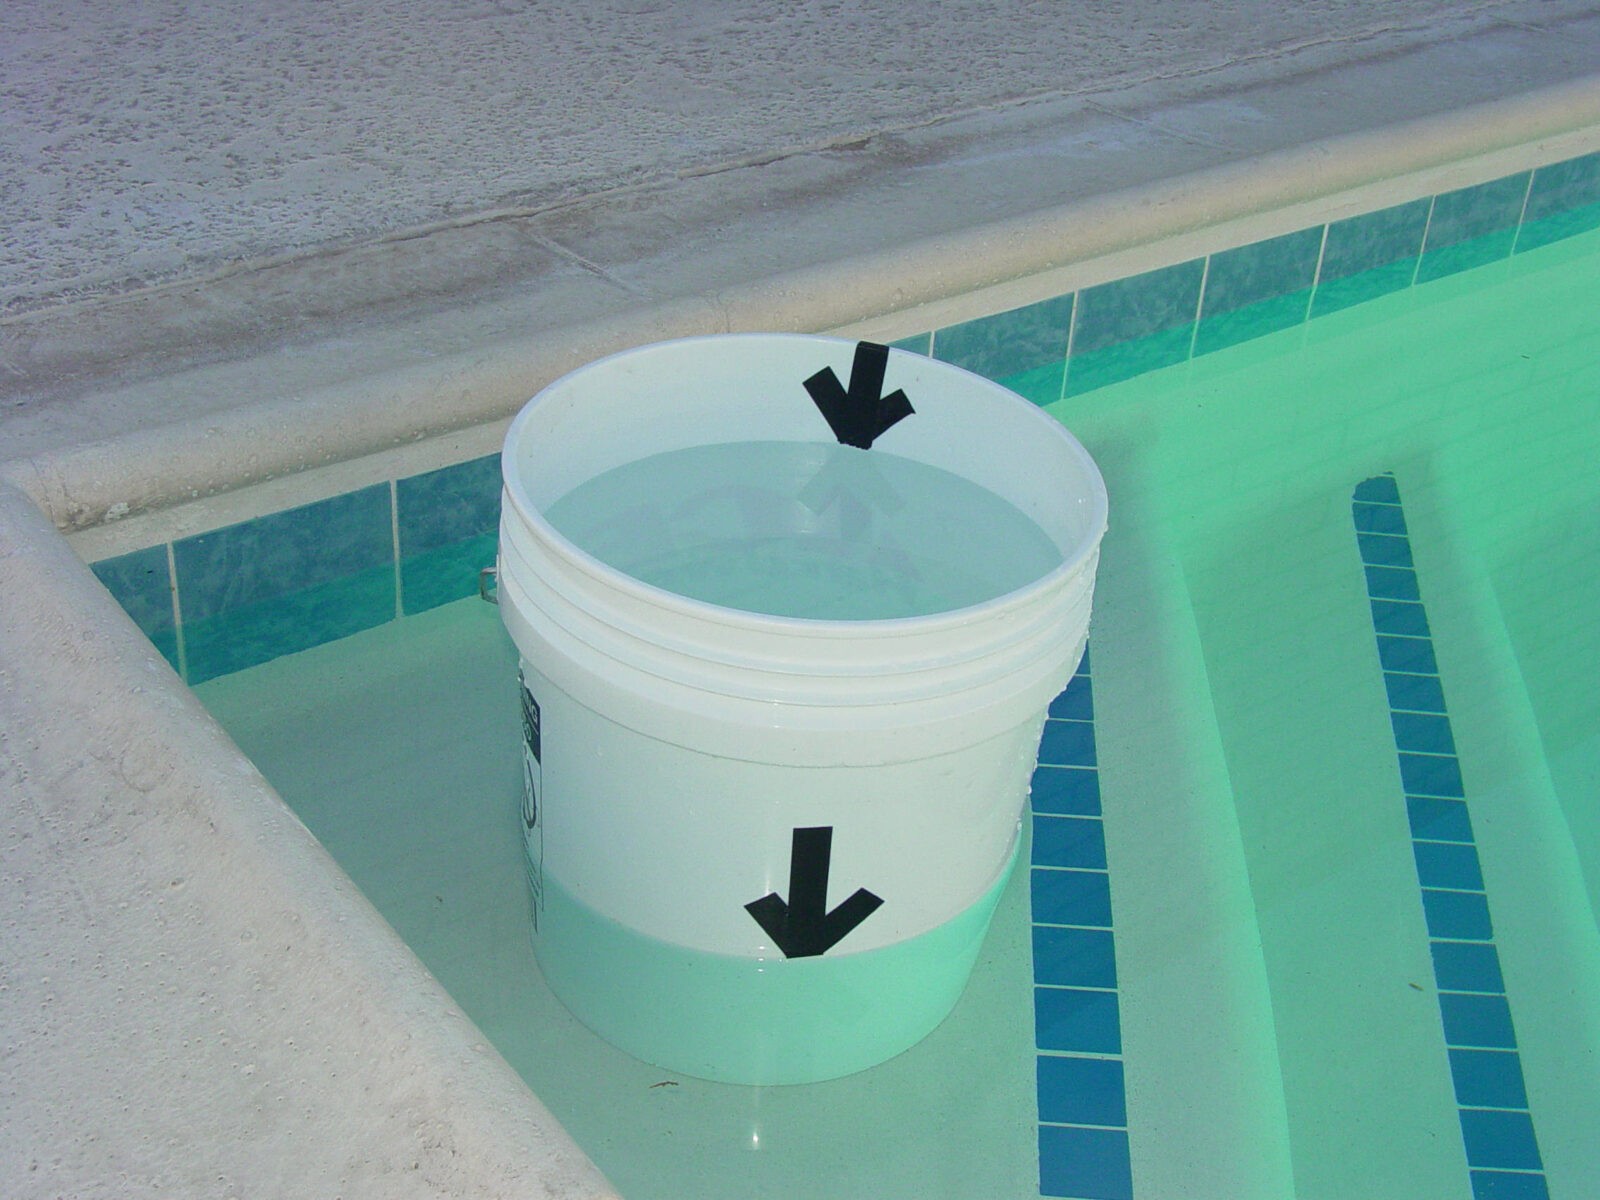 Pool Leak? Do the The Bucket Test